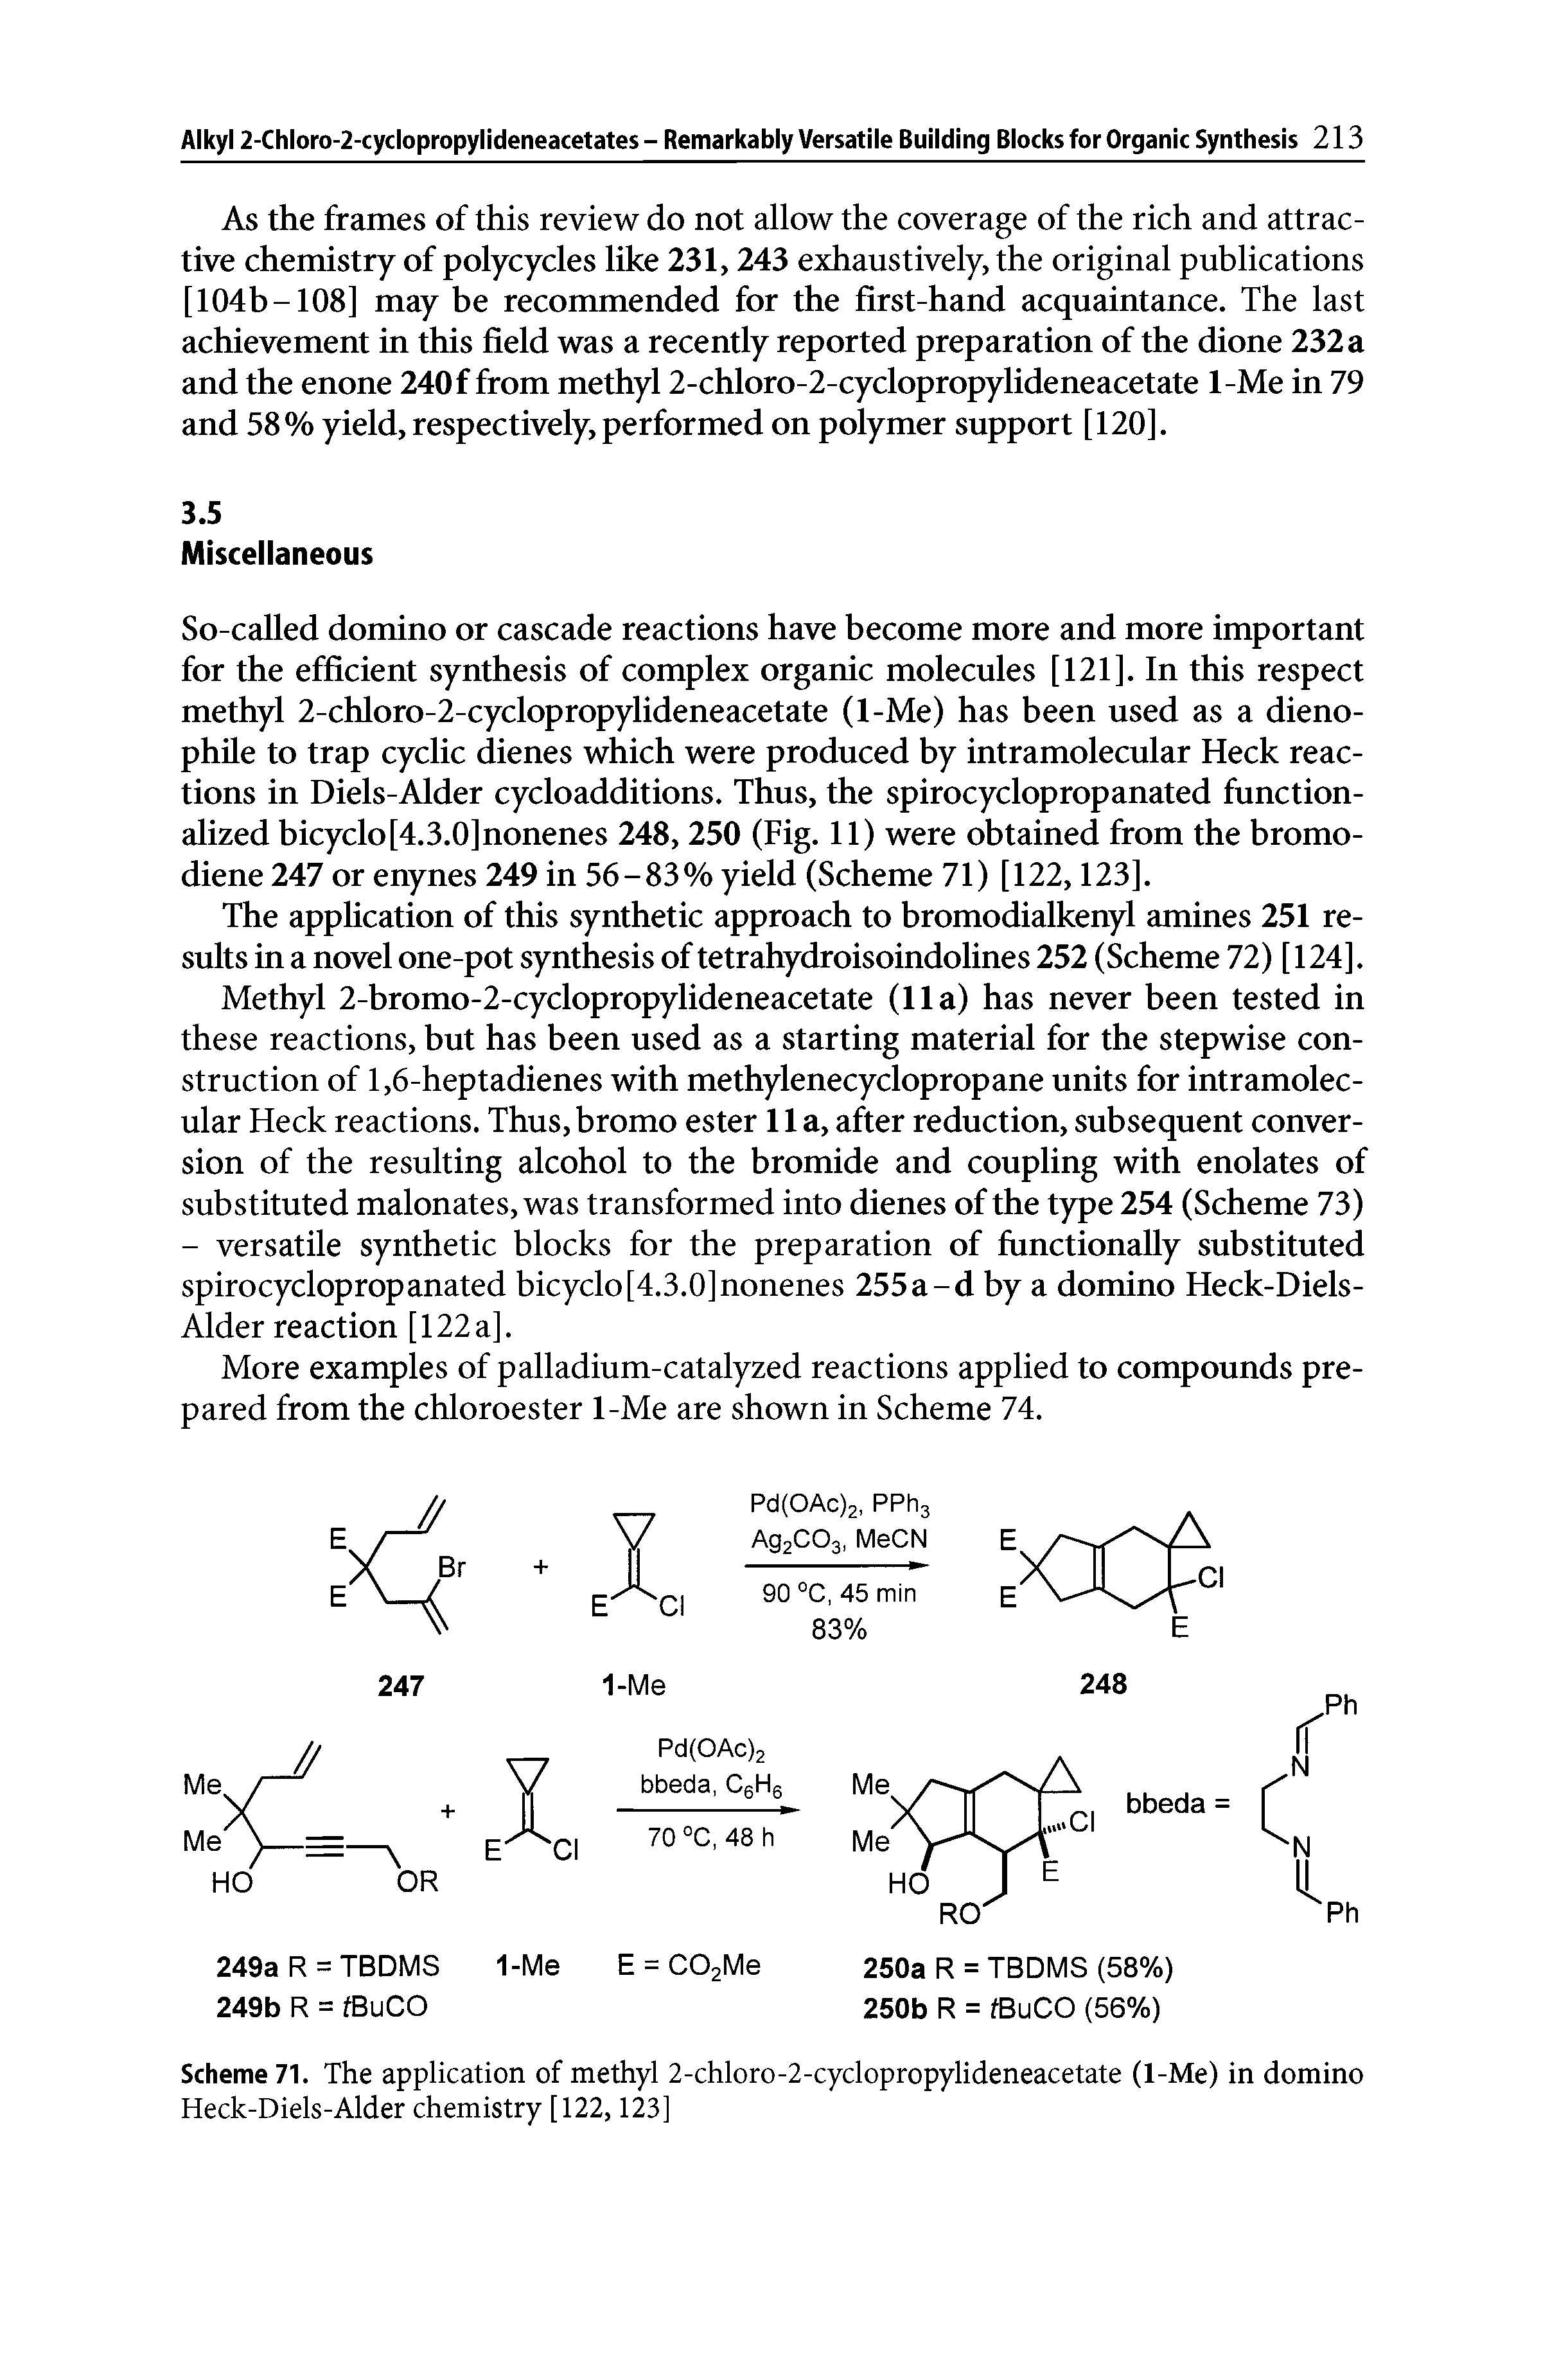 Scheme 71. The application of methyl 2-chloro-2-cyclopropylideneacetate (1-Me) in domino Heck-Diels-Alder chemistry [122,123]...